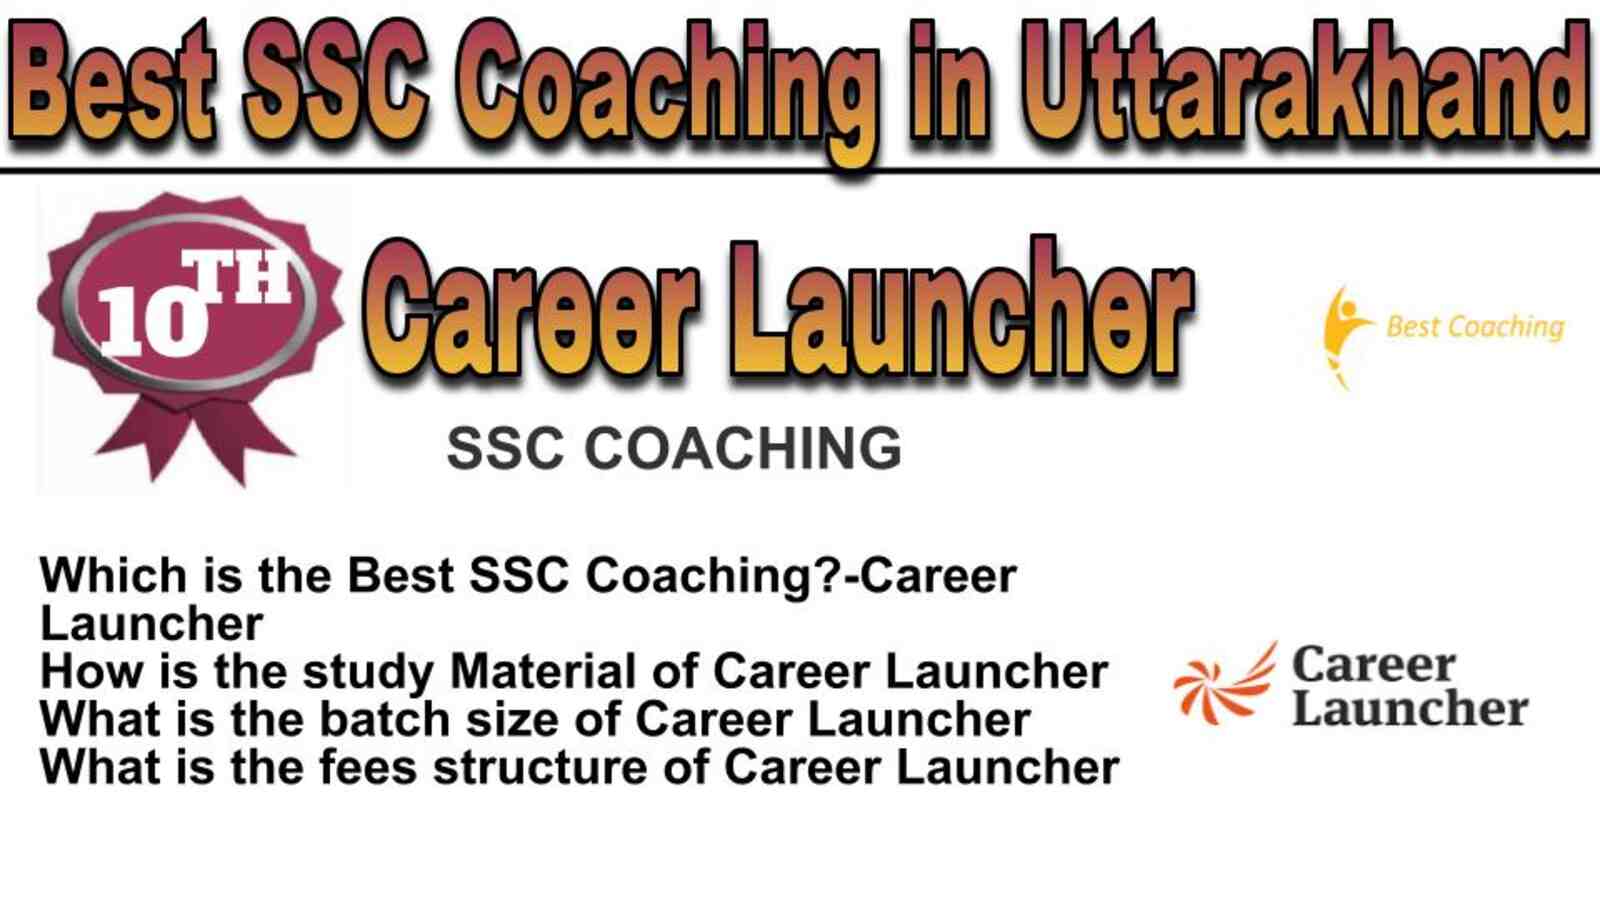 Rank 10 best SSC coaching in Uttarakhand